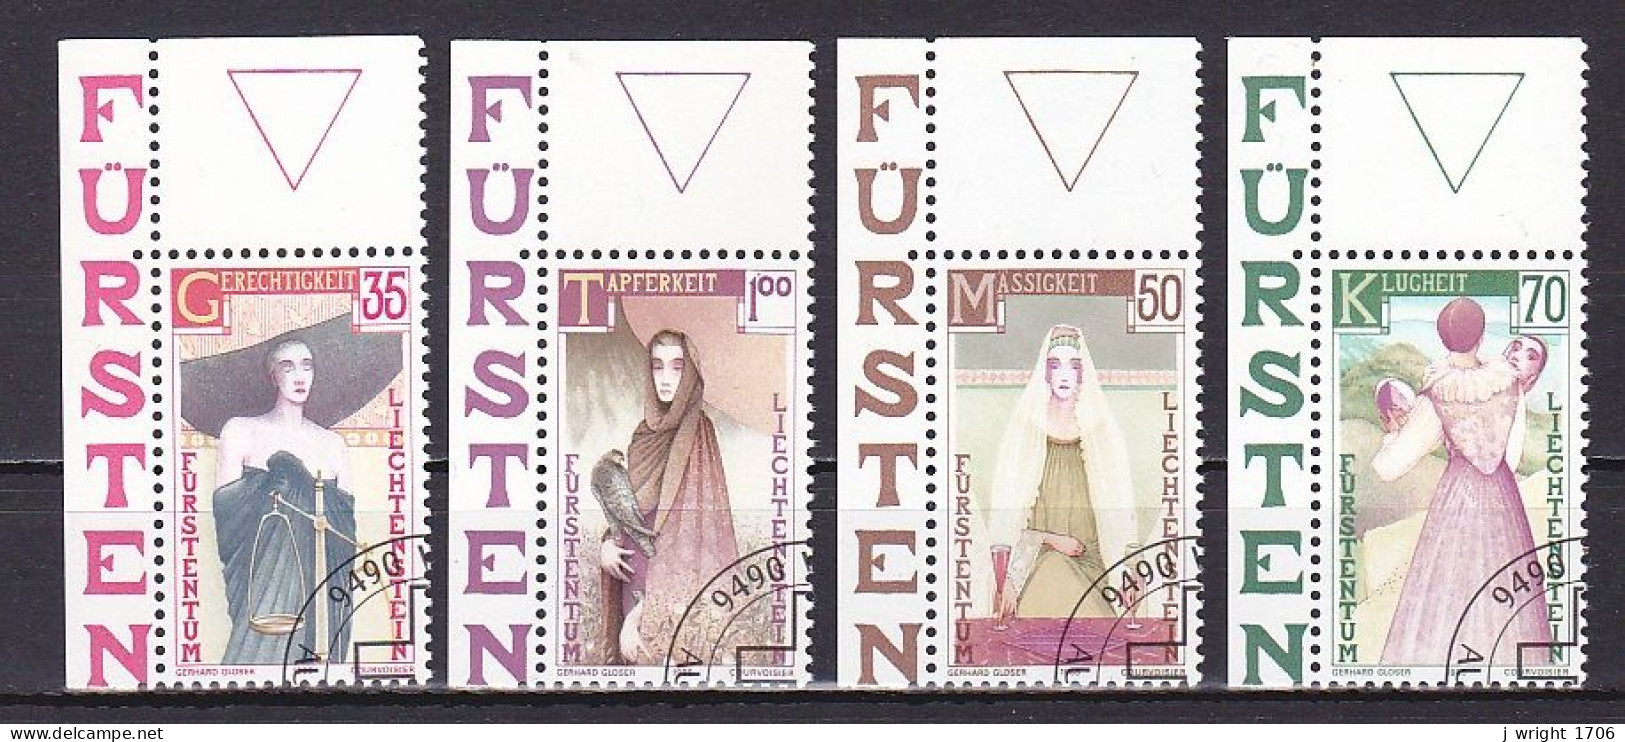 Liechtenstein, 1985, Cardinal Virtues, Set, CTO - Used Stamps